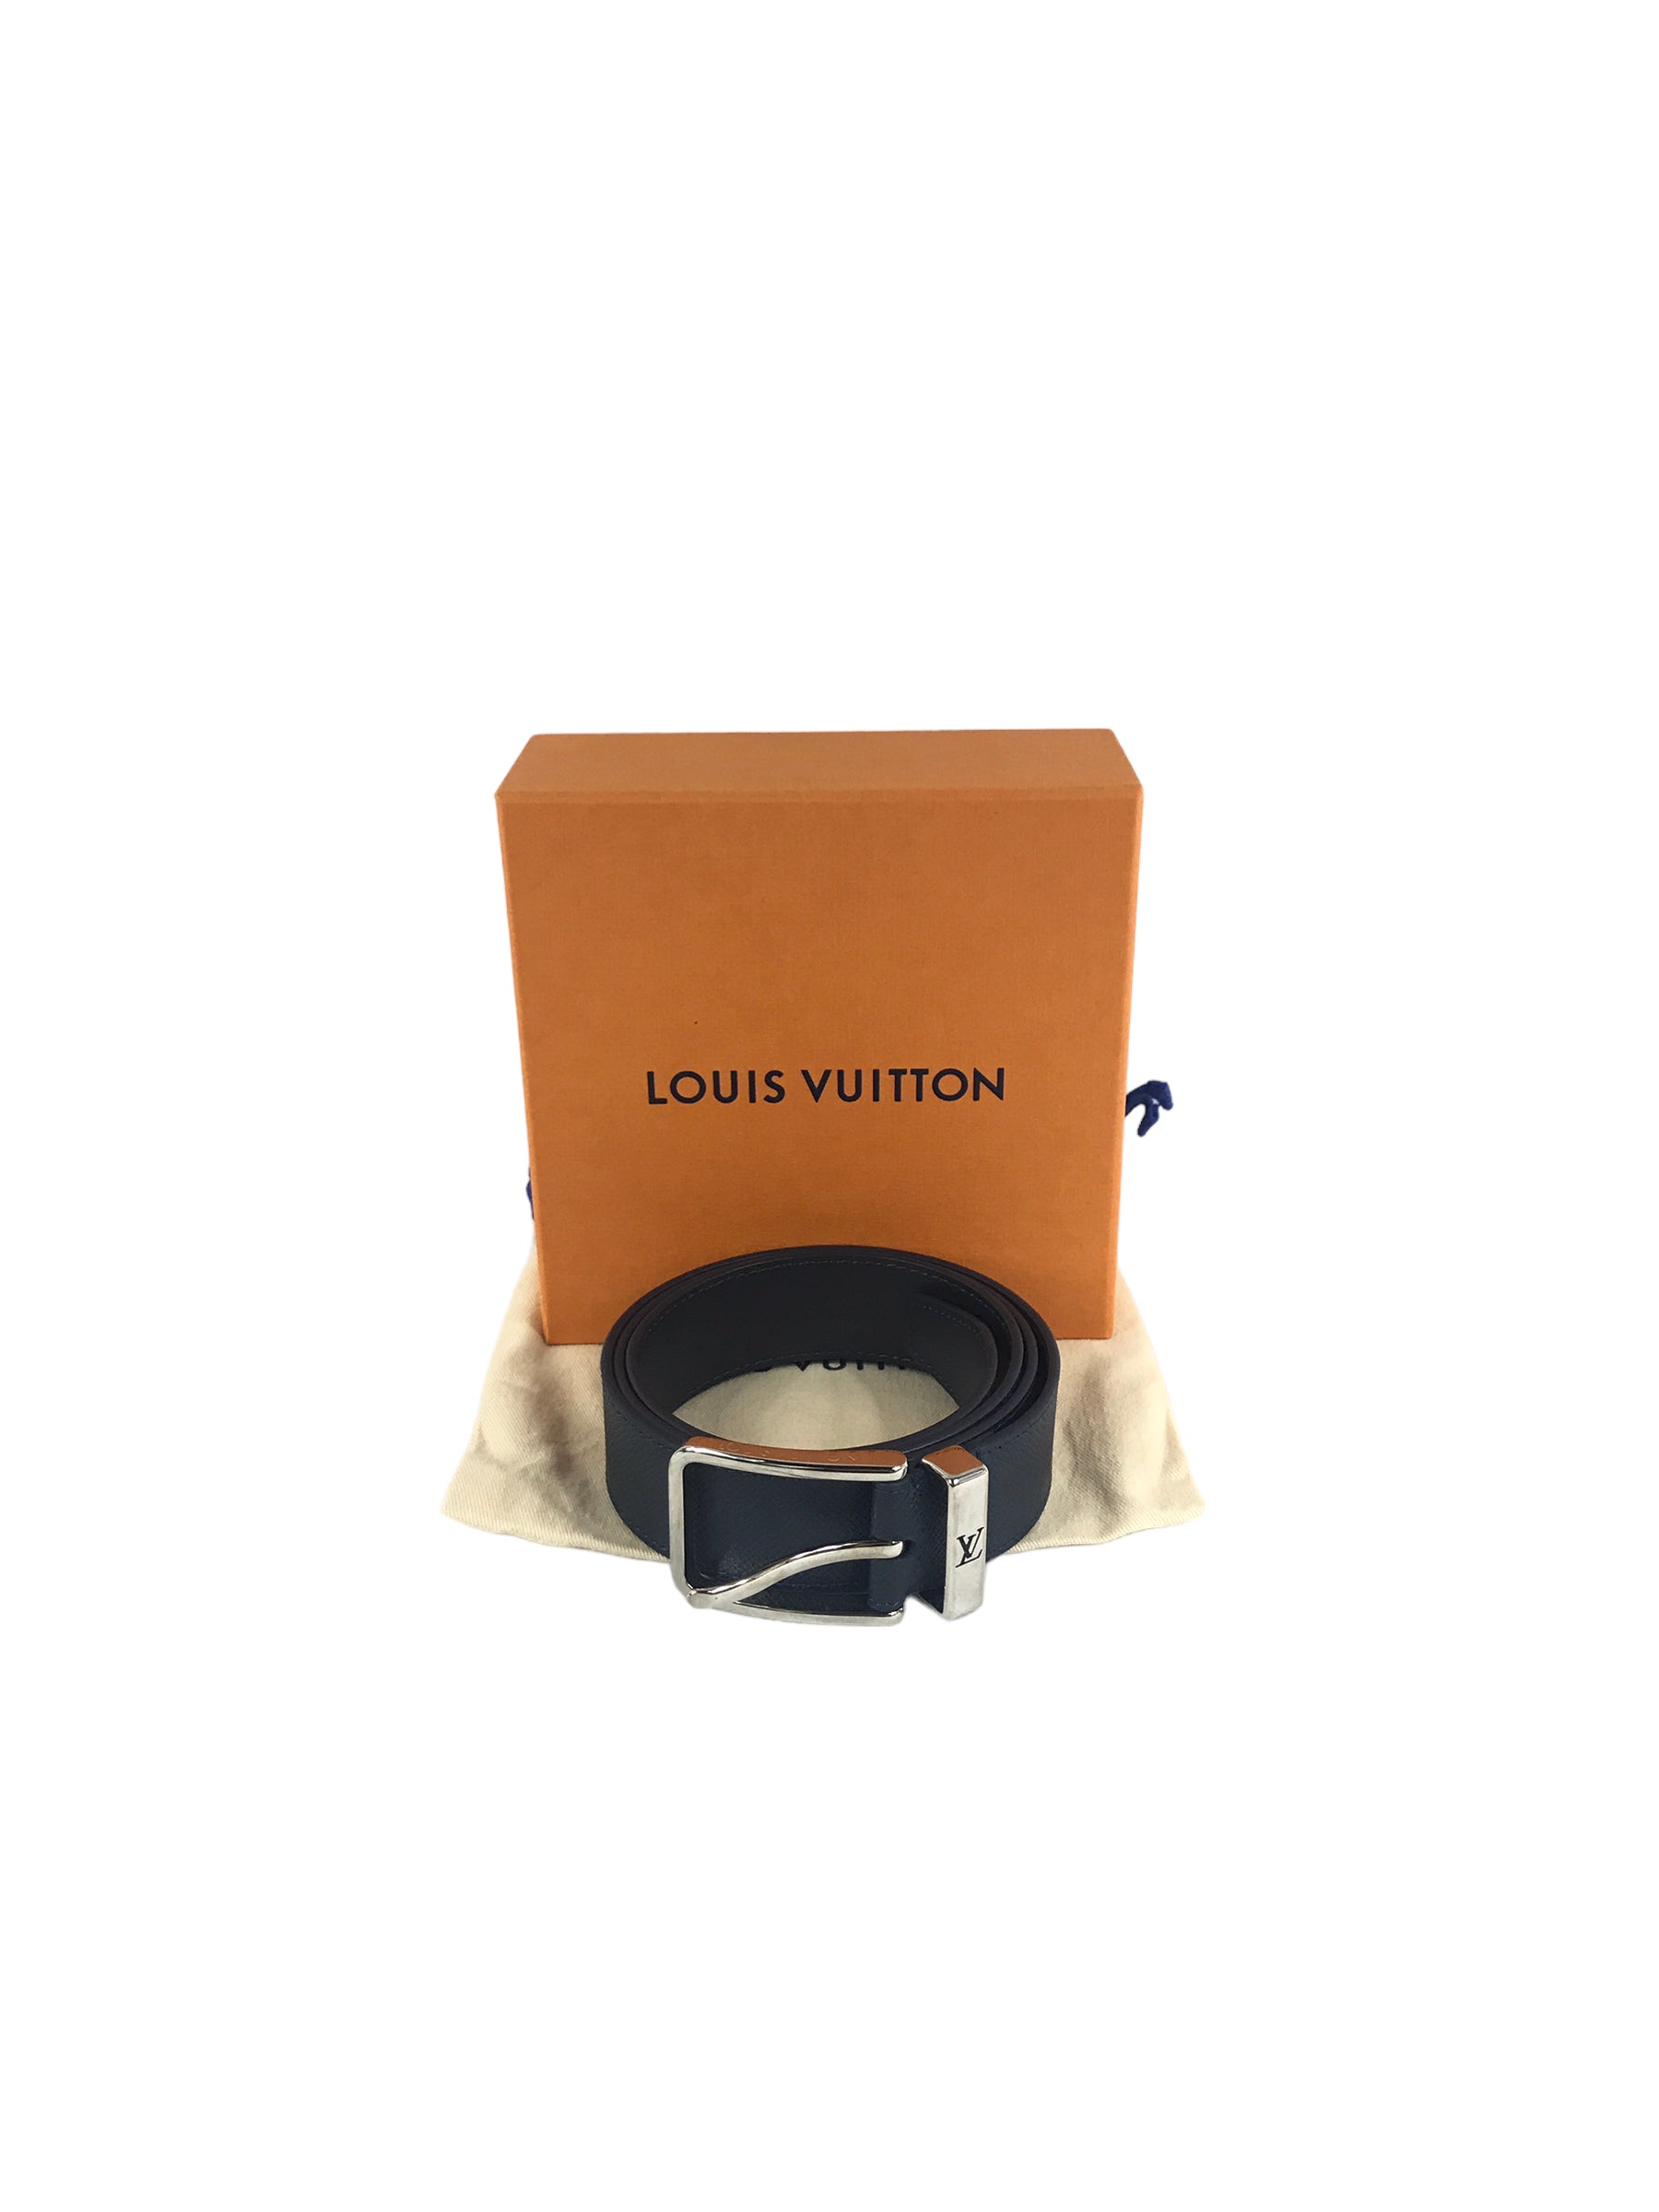 LOUIS VUITTON Monogram 20mm Initiales Belt 85 34 Black 1233741